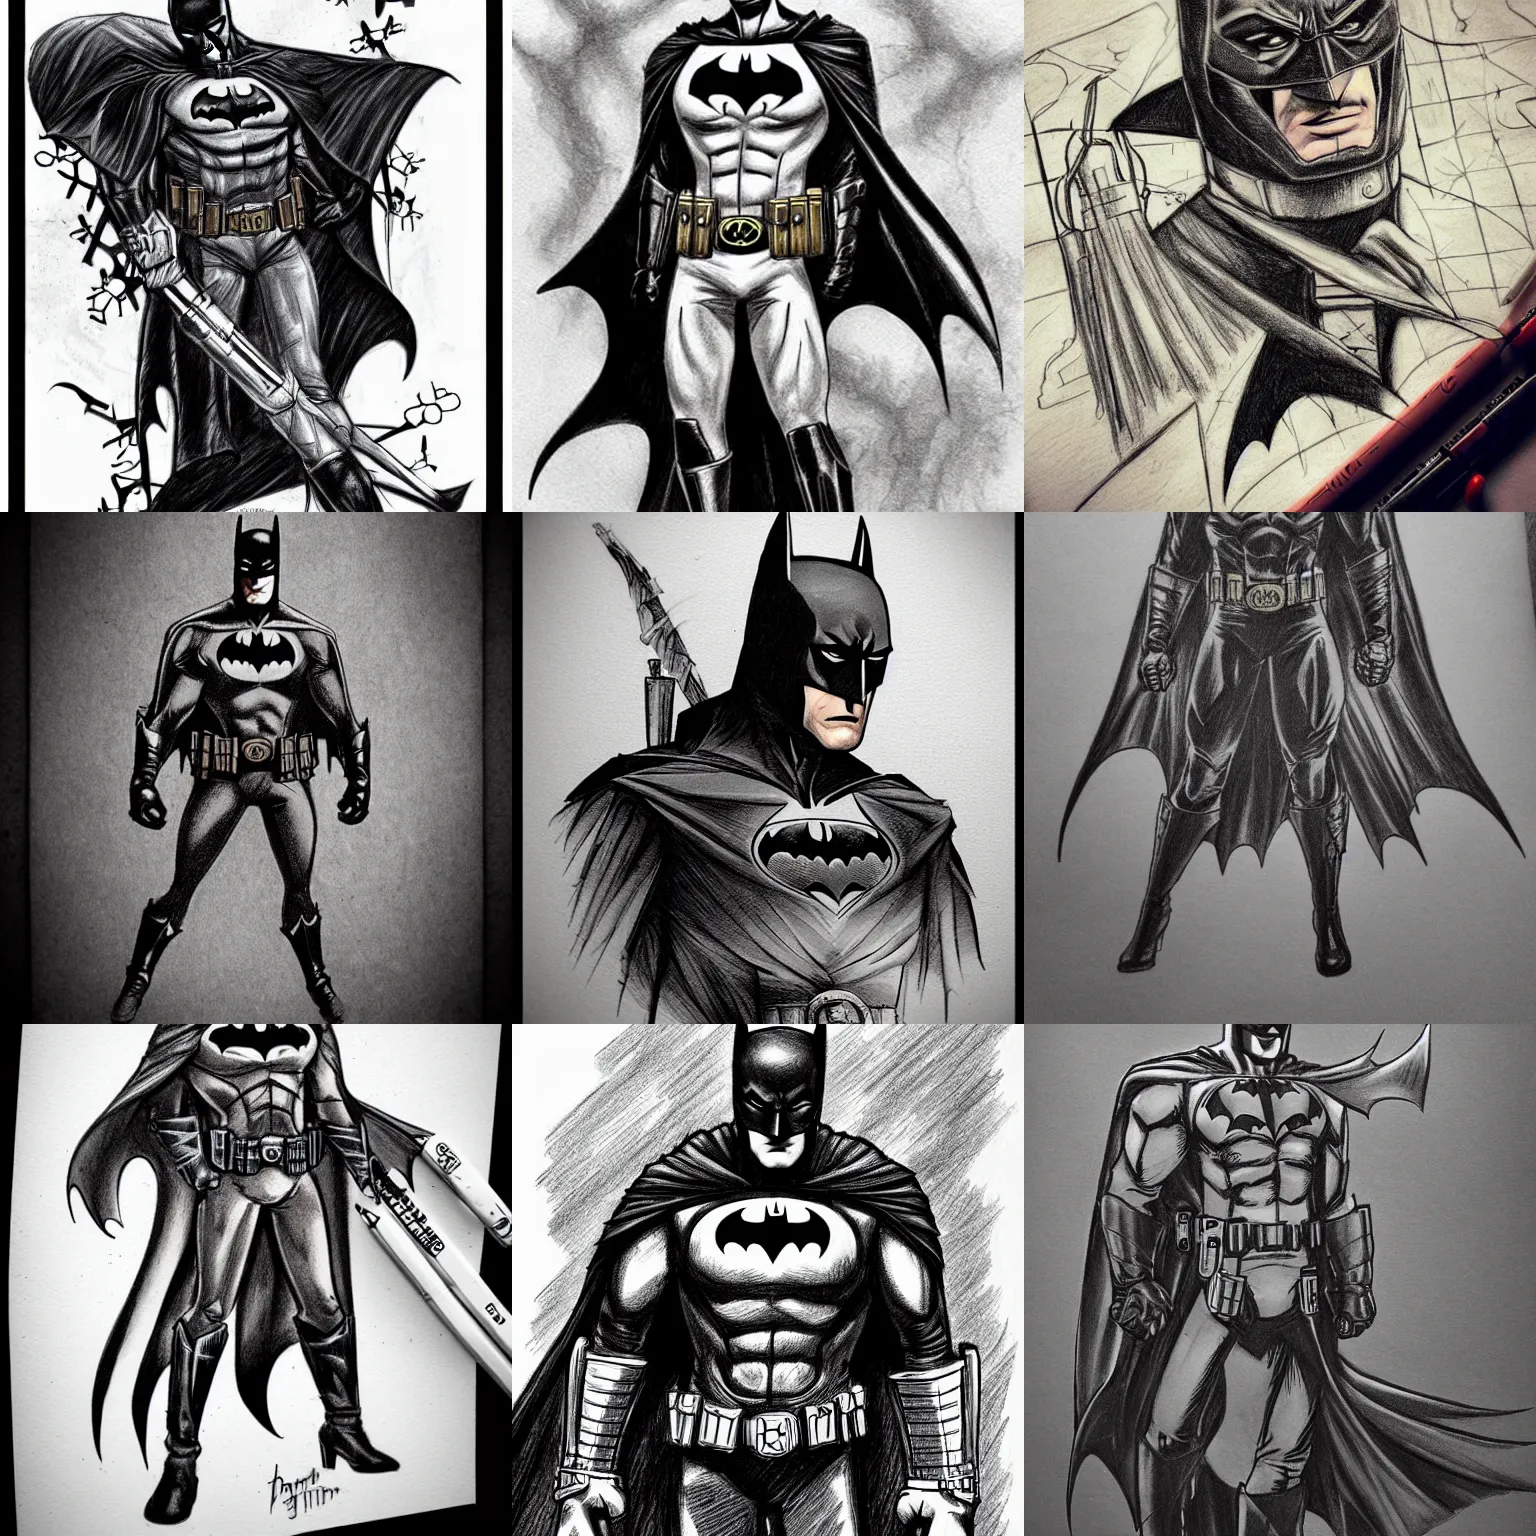 How to draw Batman logo tattoo design - YouTube